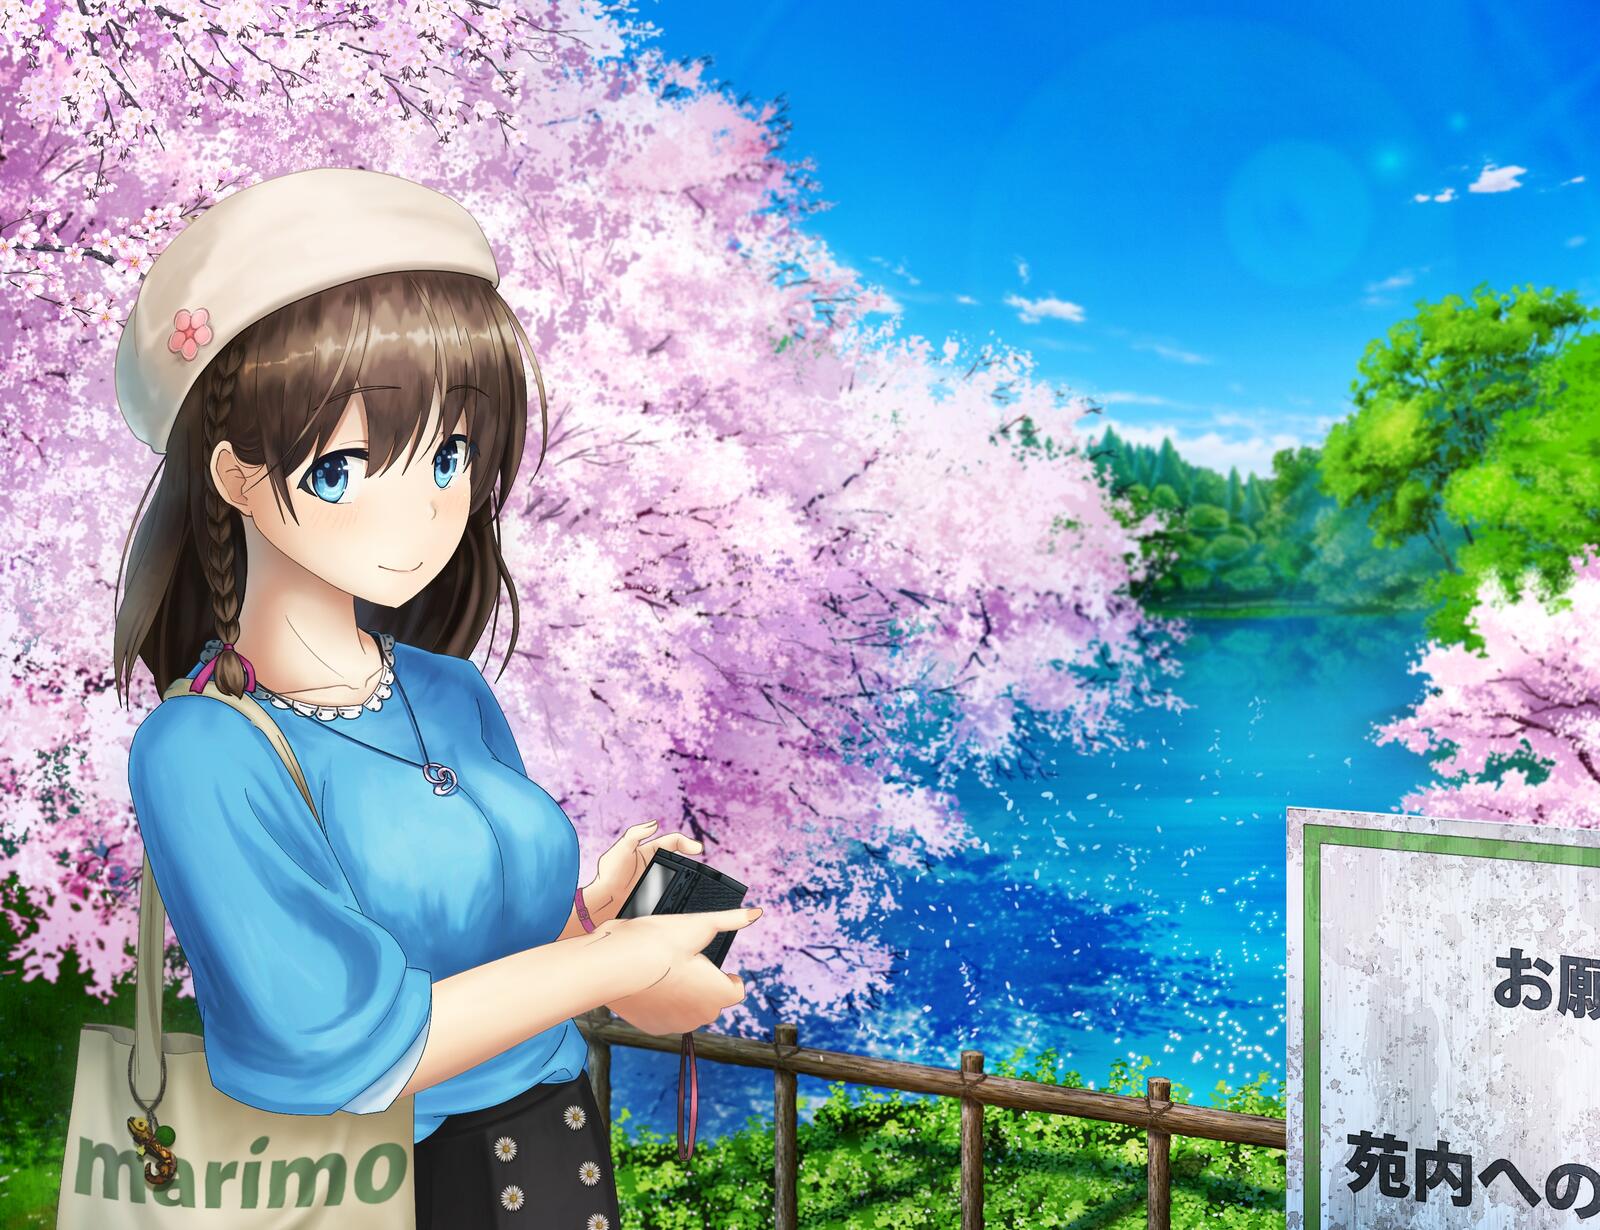 Wallpapers virtual yiutuber yuna channel sakura bloom on the desktop